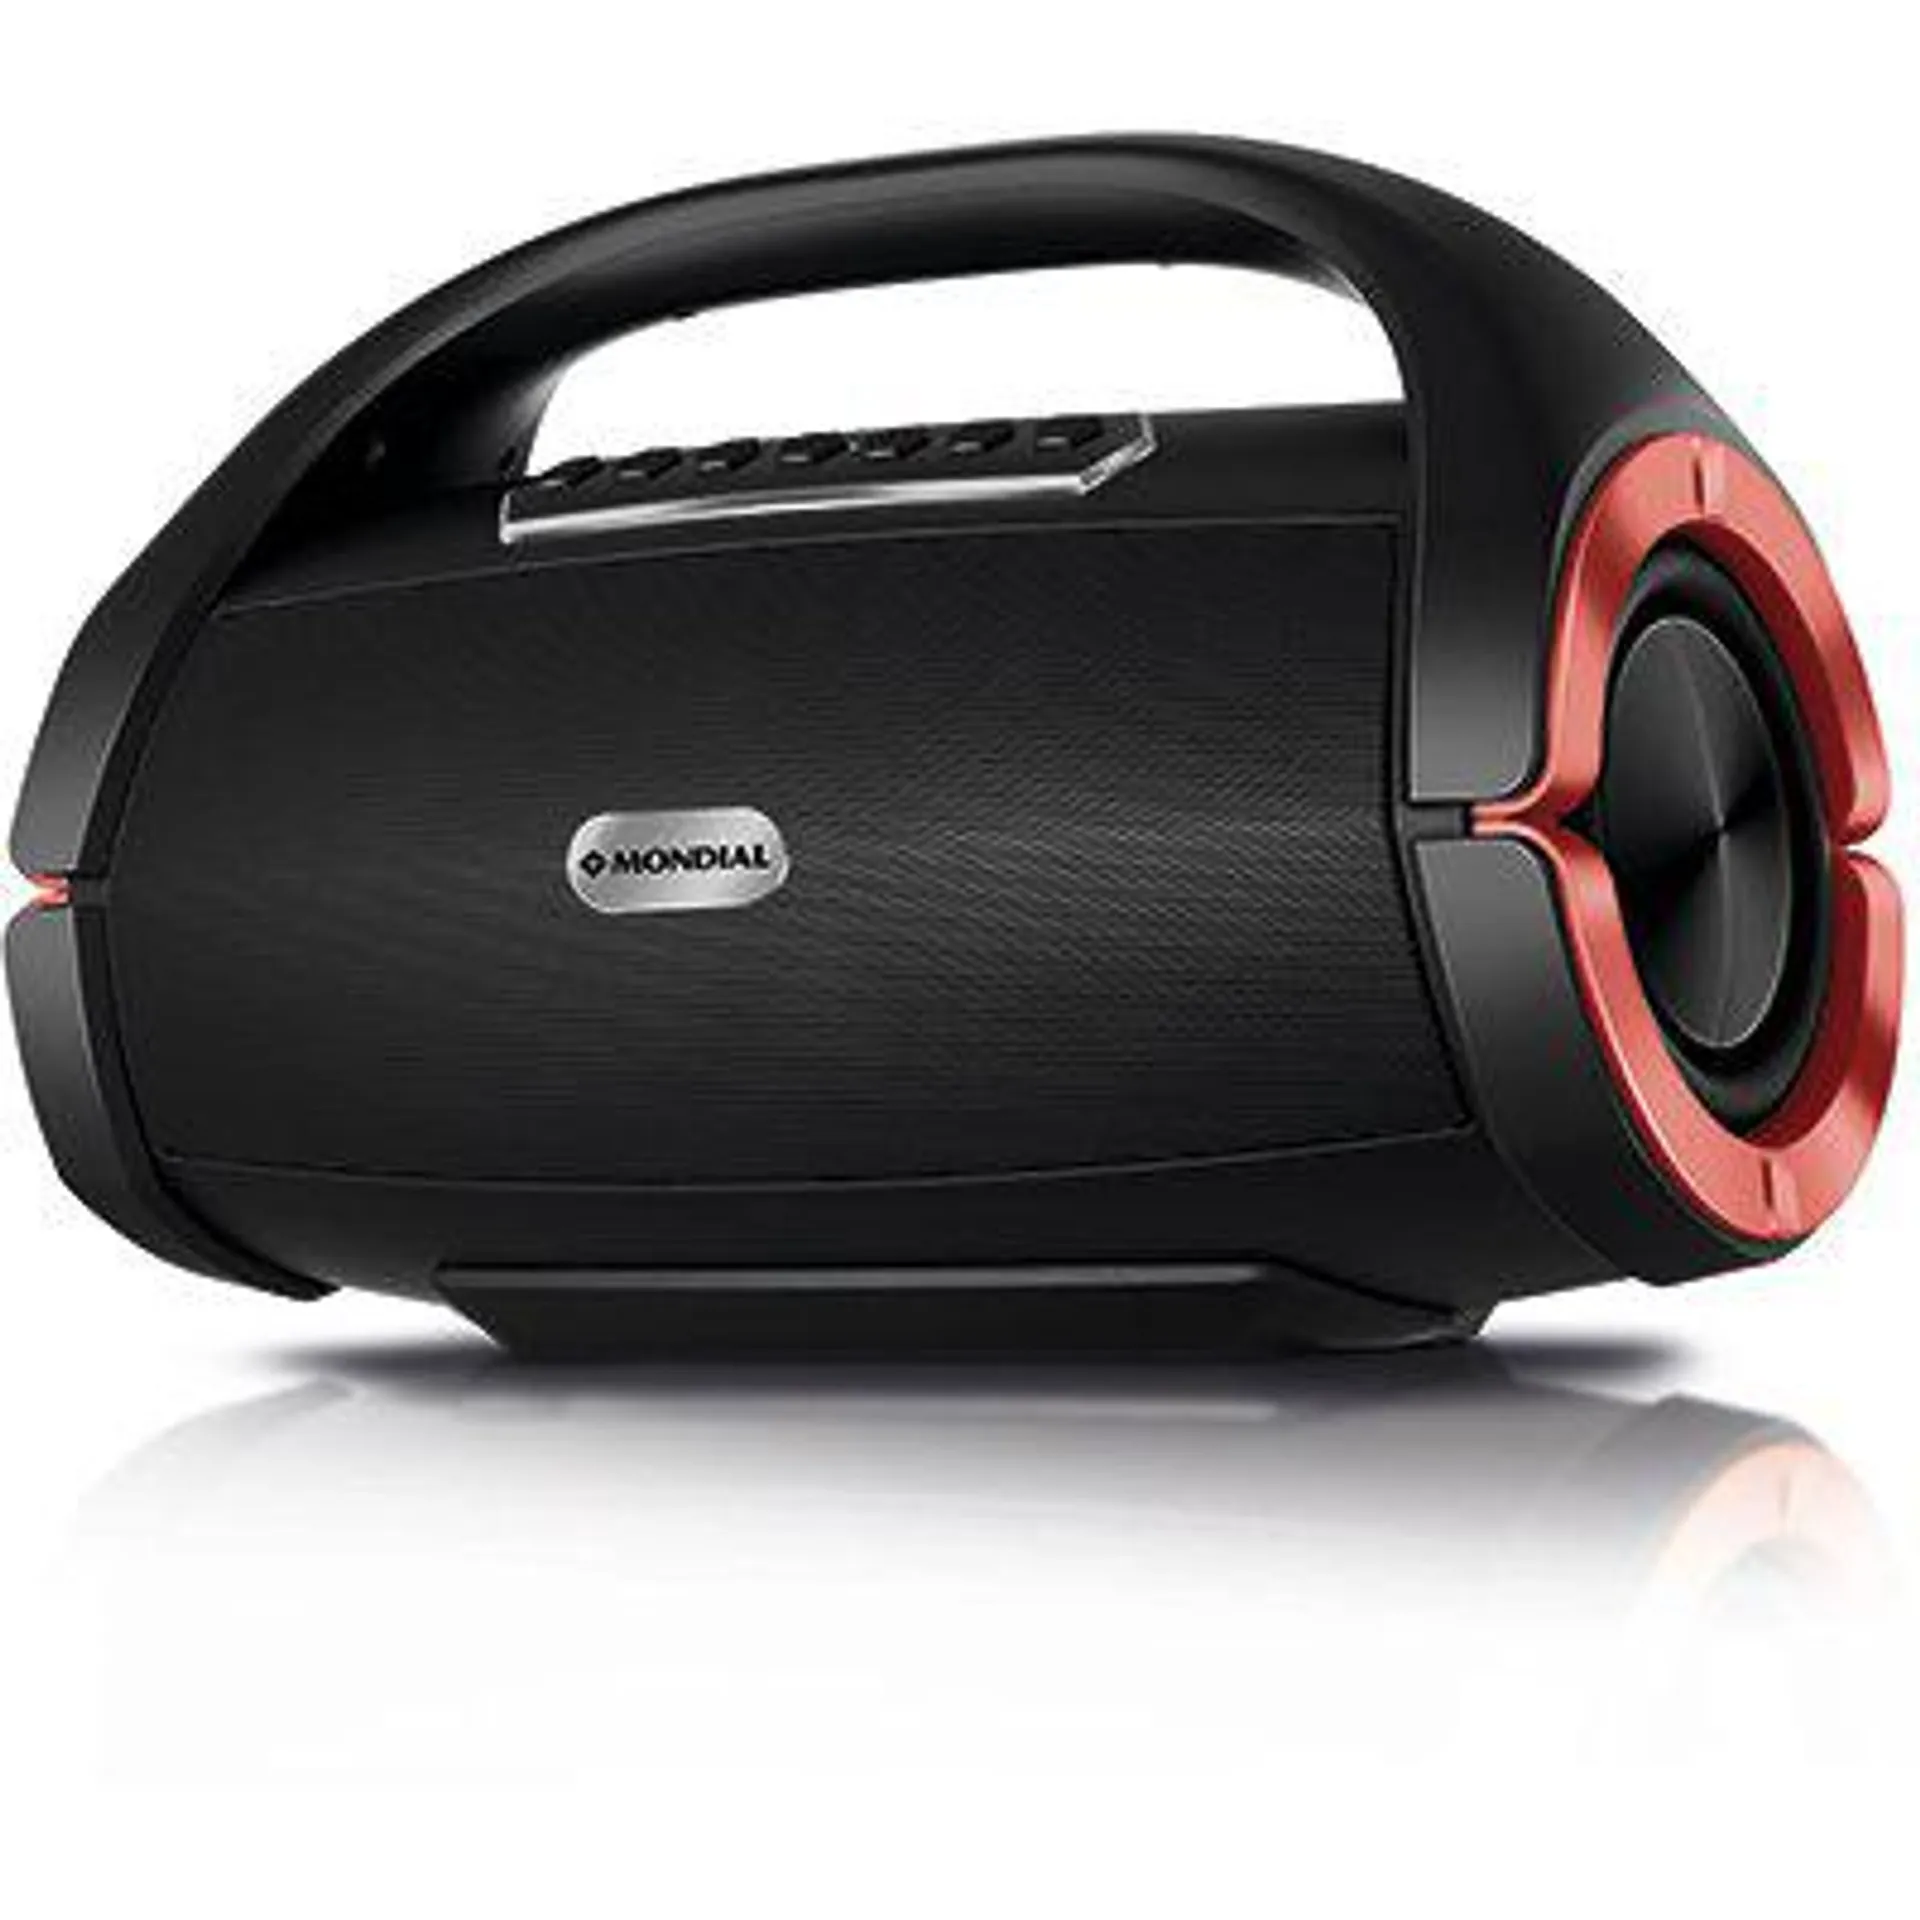 Caixa de som Bluetooth, 150w rms, Monster Sound Speaker, Bivolt, SK-06, Mondial - CX 1 UN